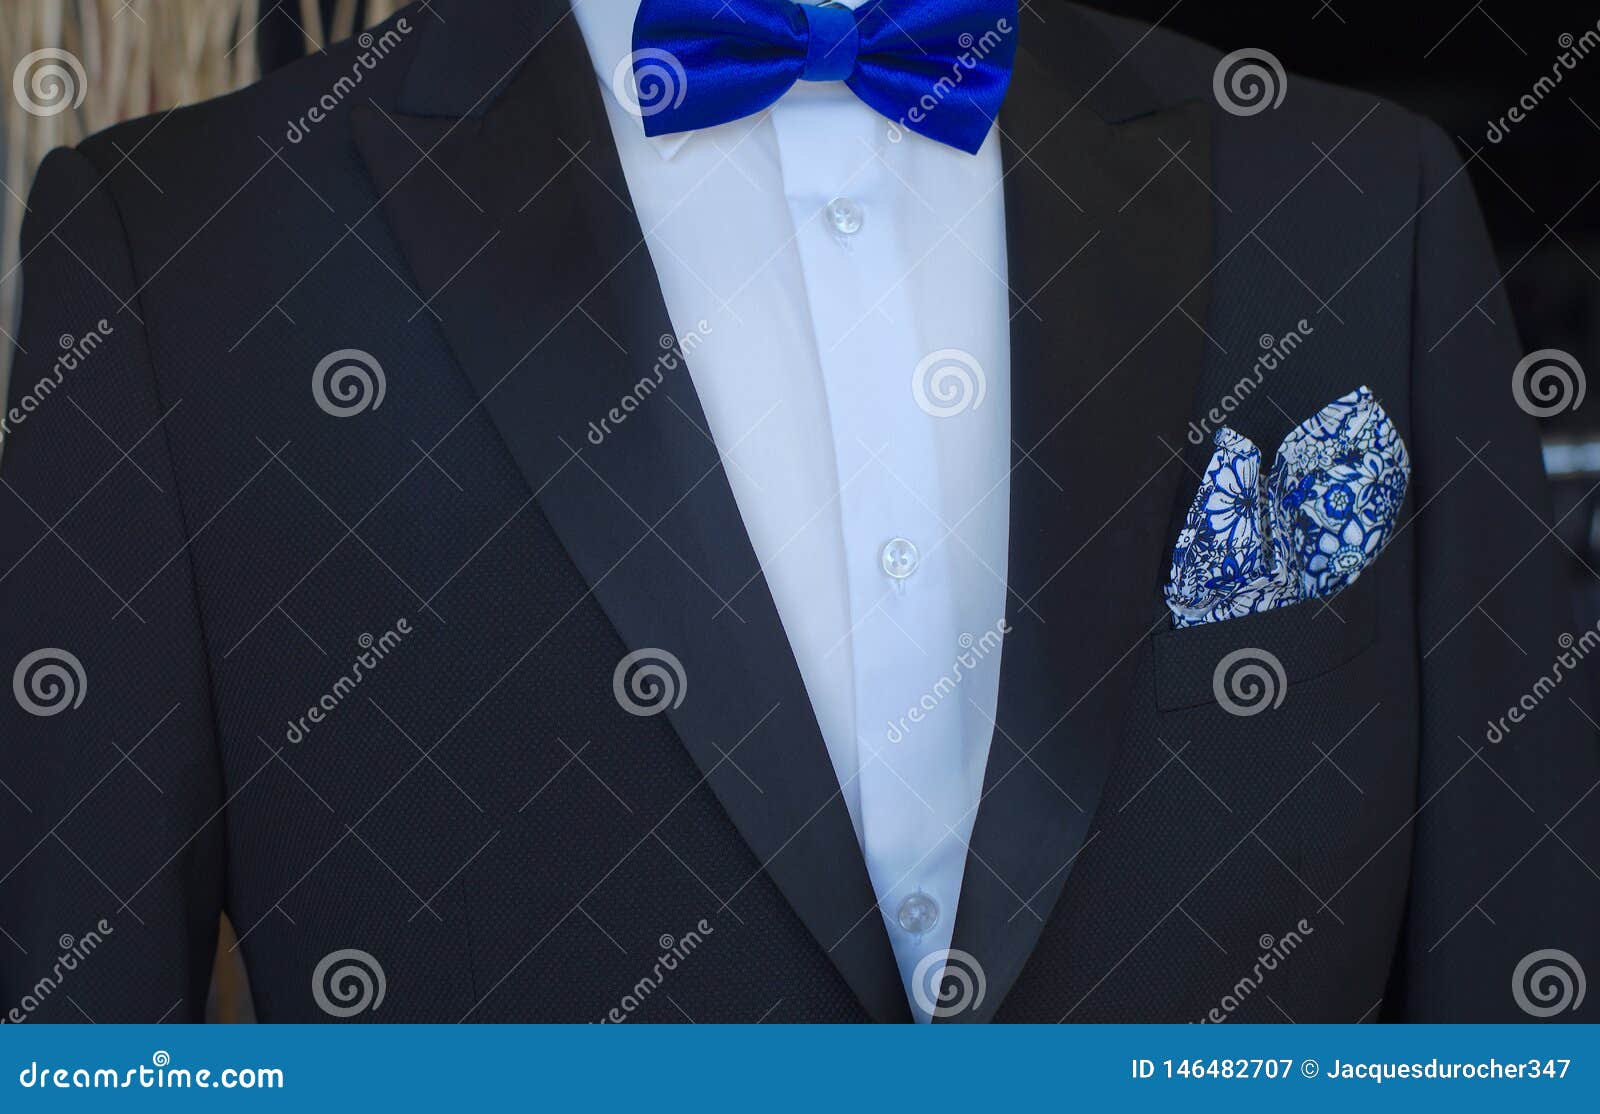 Classic Style Black Suit Blue Bowtie Elegant Menswear Stock Image